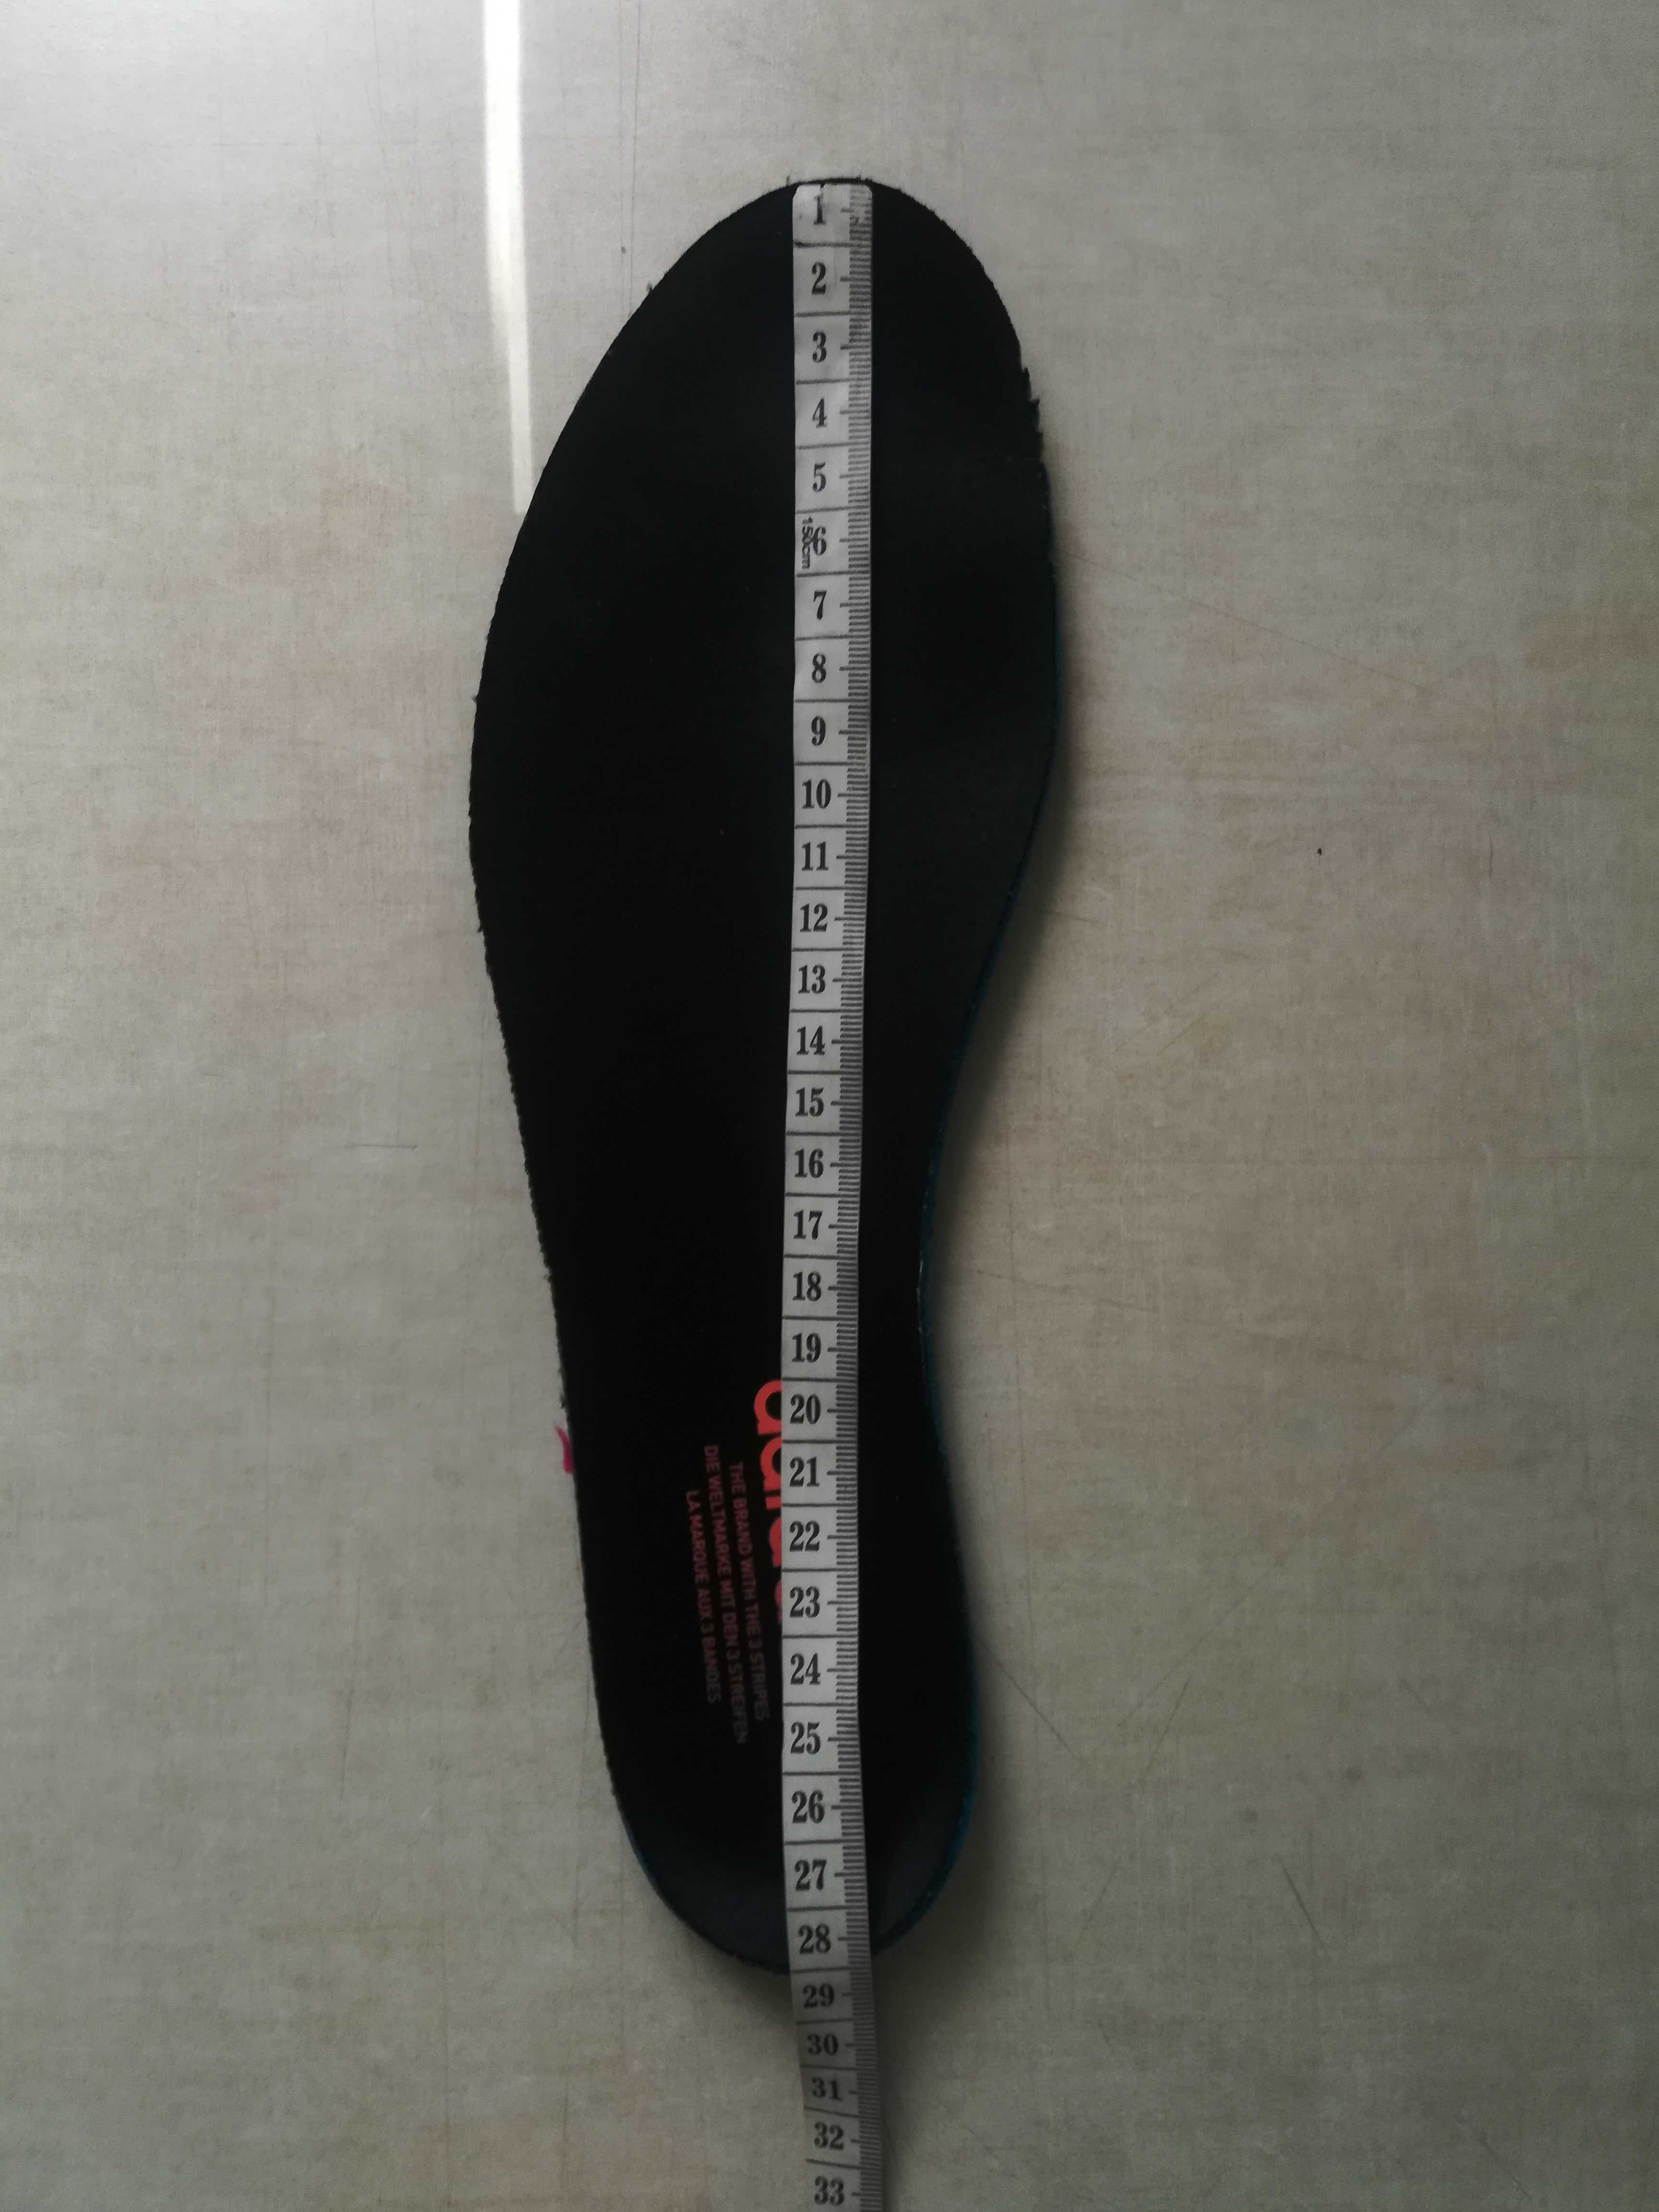 Adidas/42-43/28 cm.